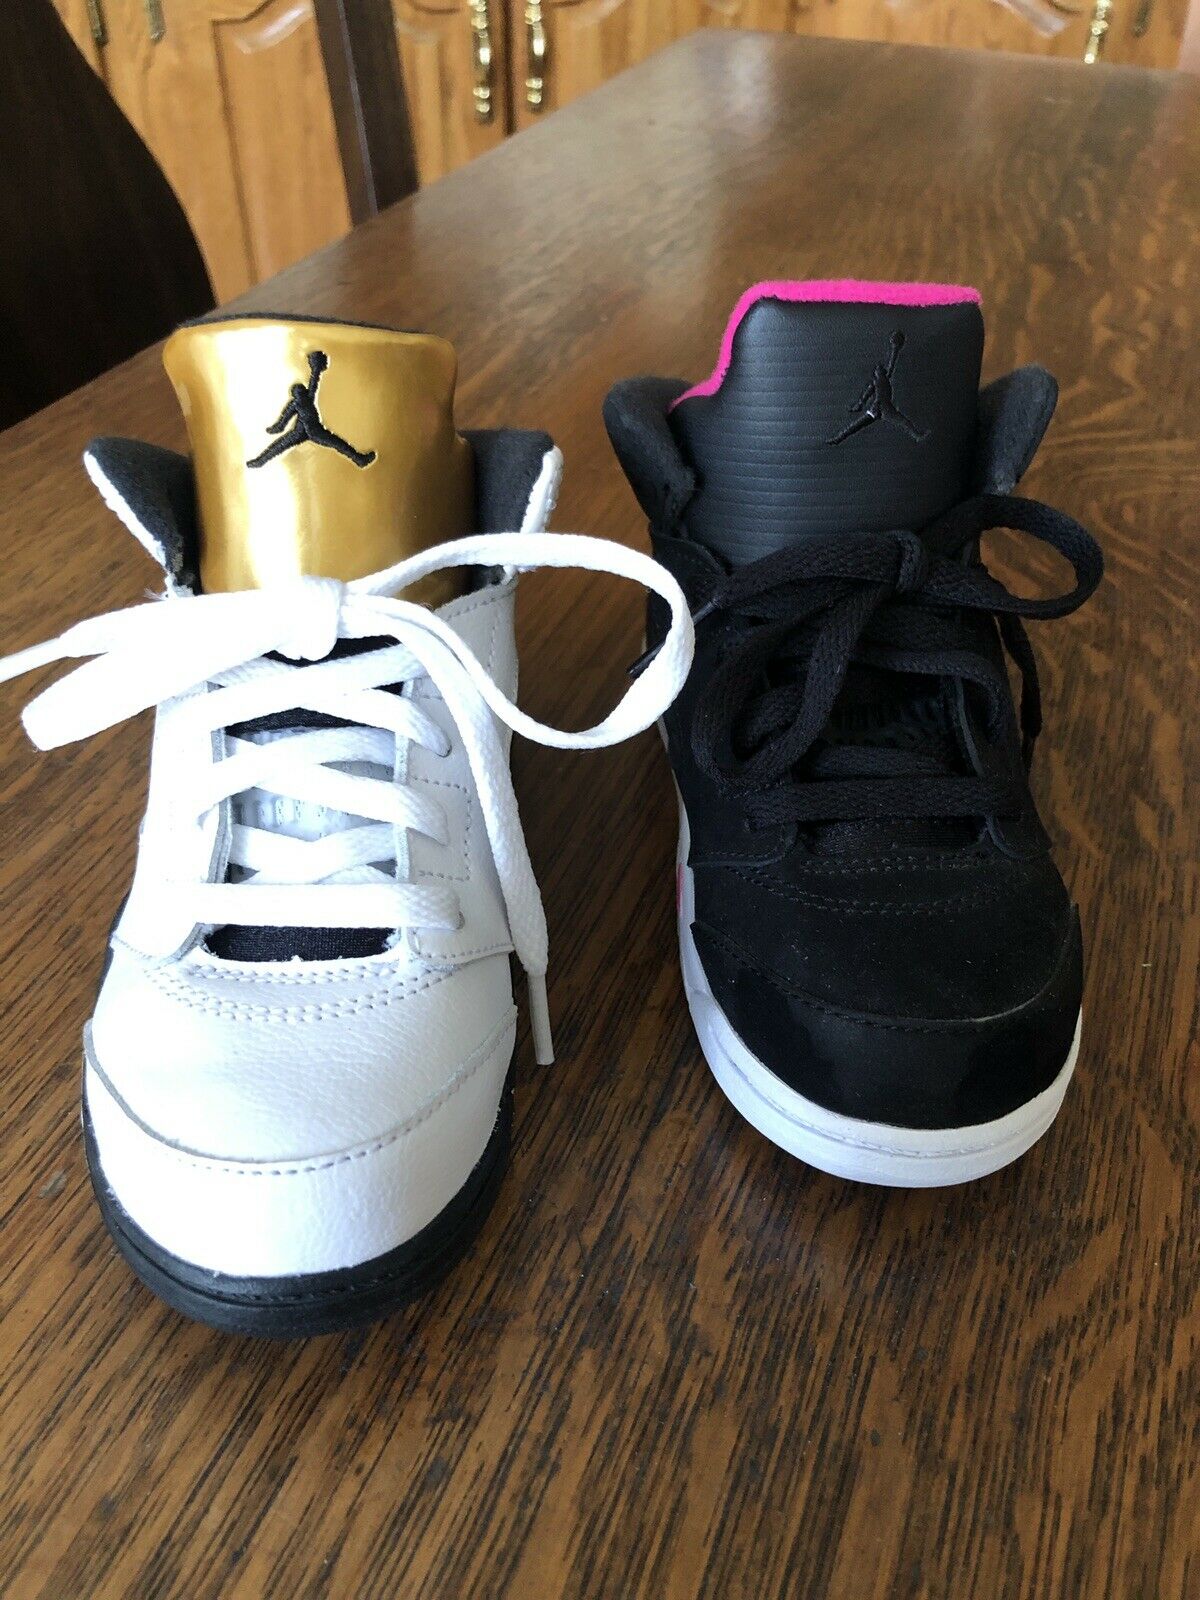 Nike Air Jordan 10c mismatched shoes same size different color and style J1 CV22